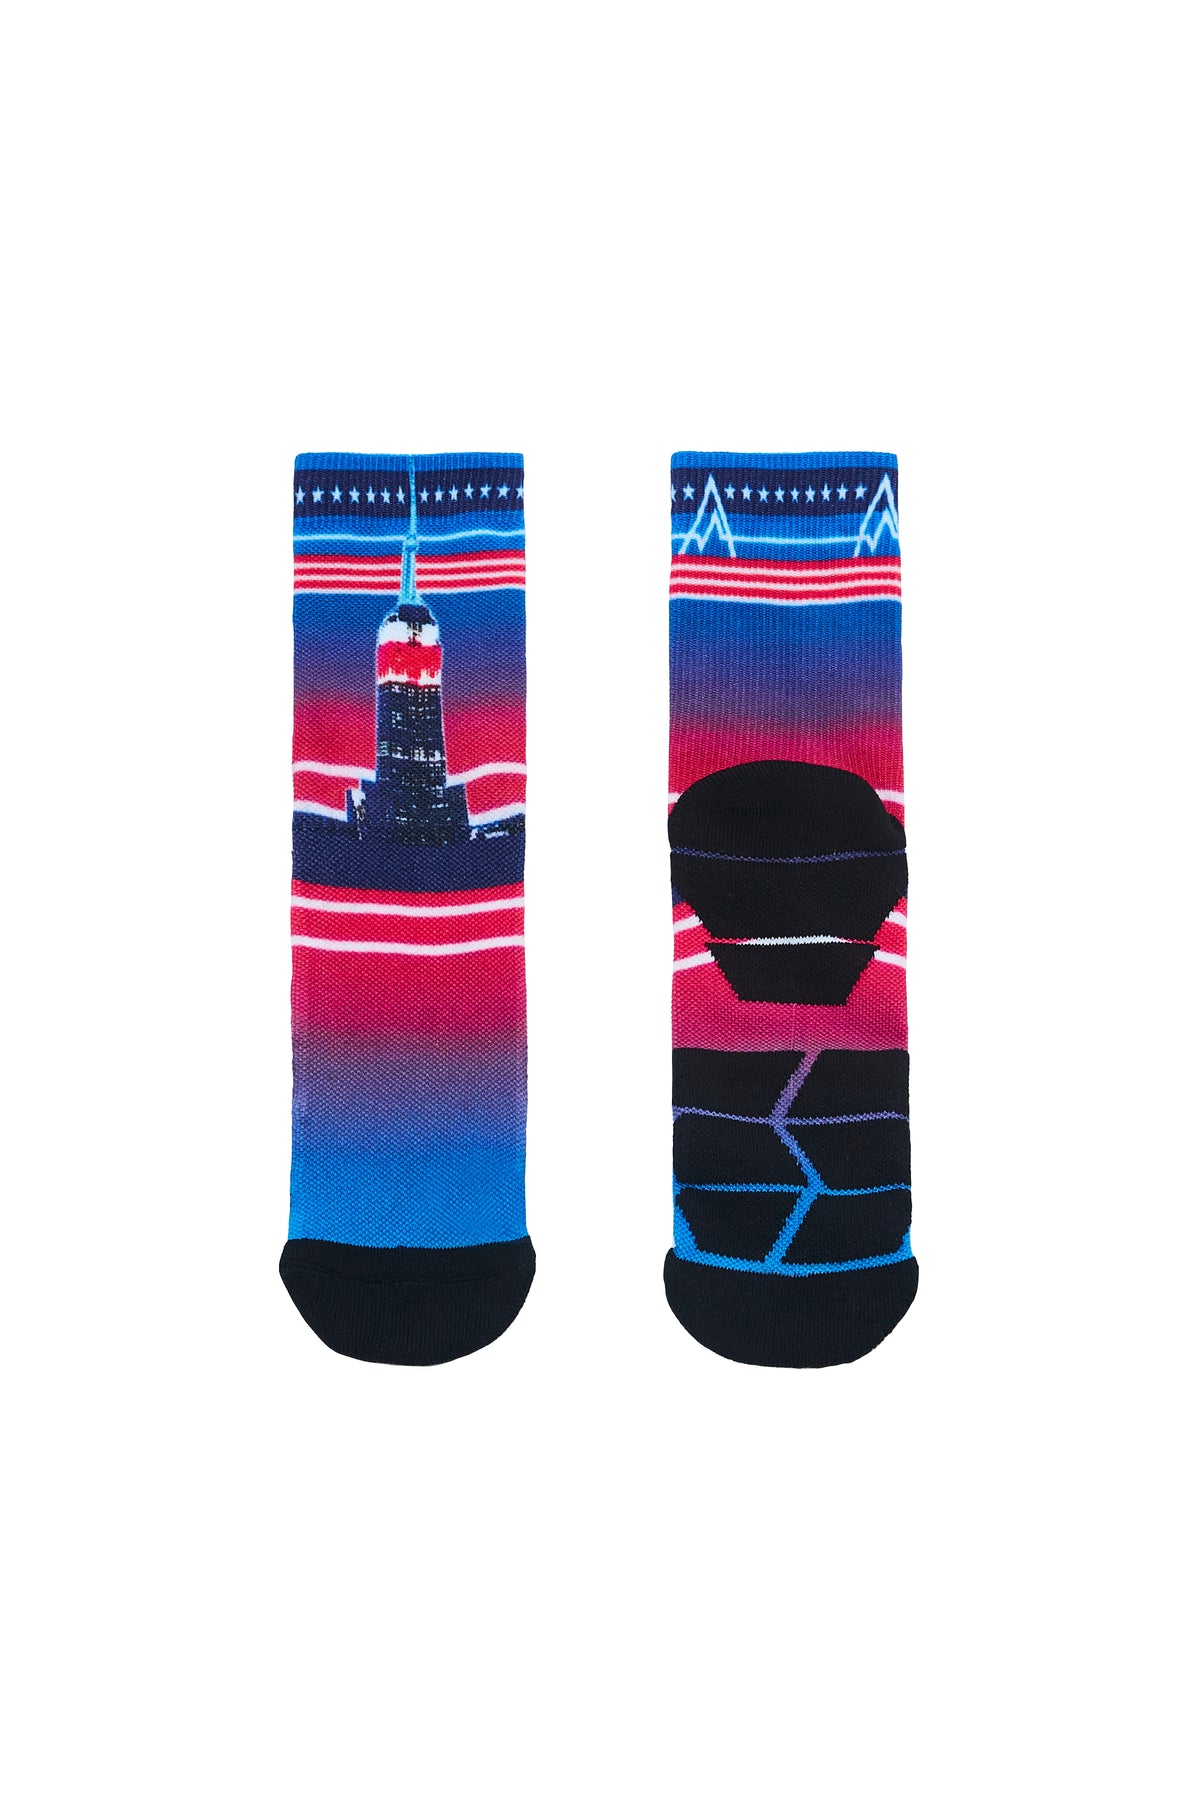 Empire State Printed Sports Socks